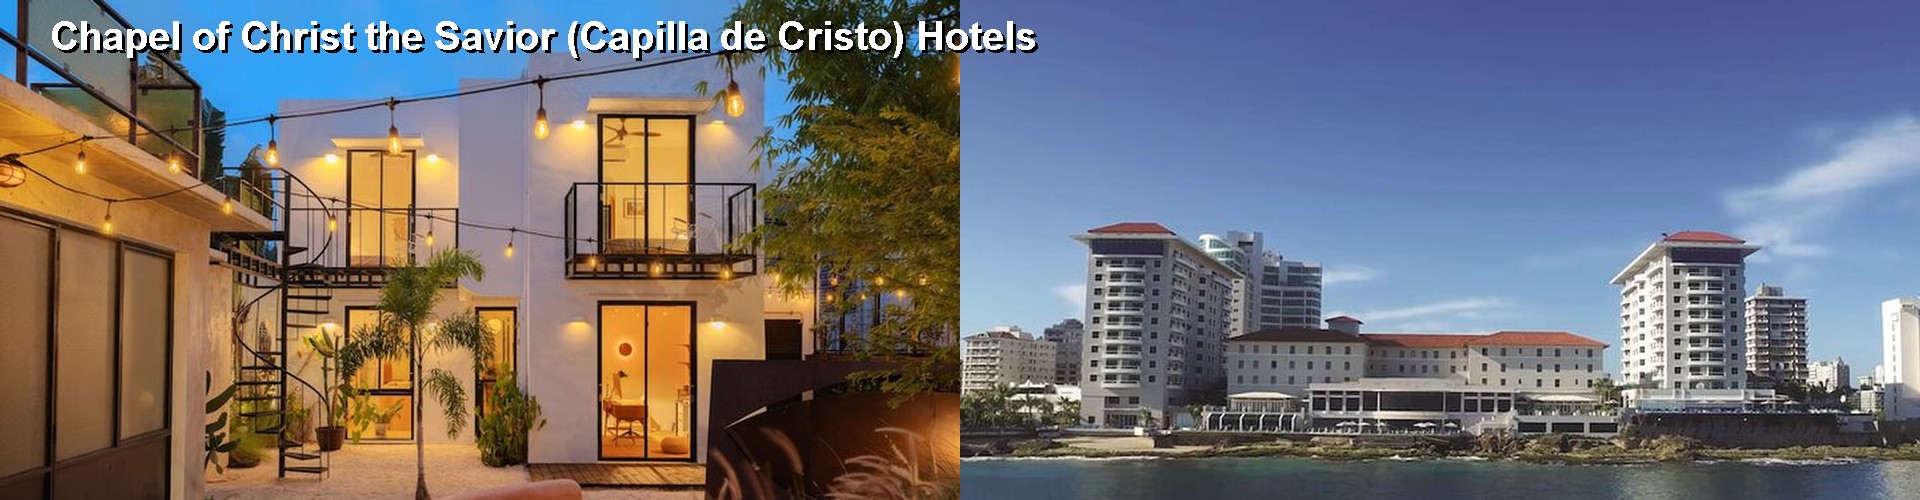 4 Best Hotels near Chapel of Christ the Savior (Capilla de Cristo)